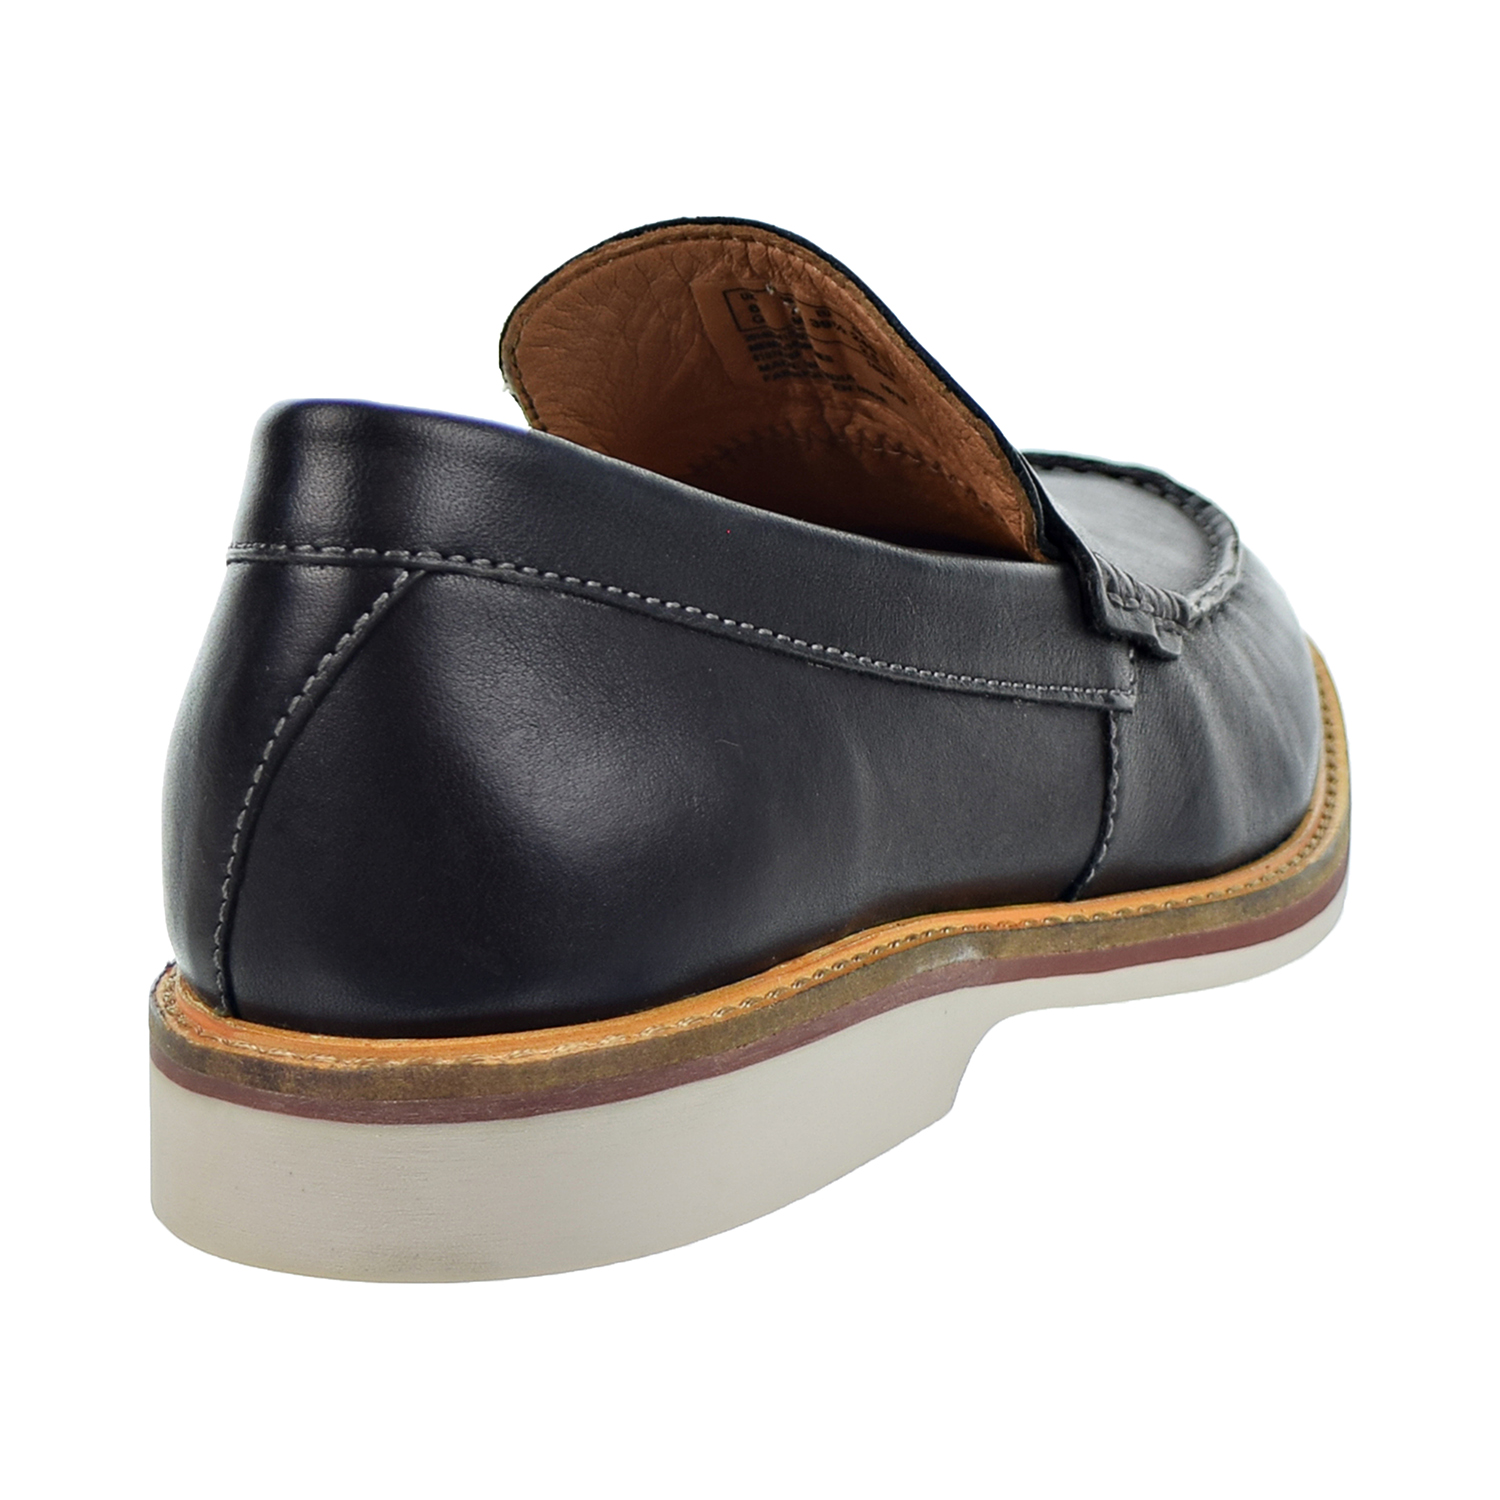 Clarks Atticus Free Men's Shoes Black Leather 26140241 | eBay